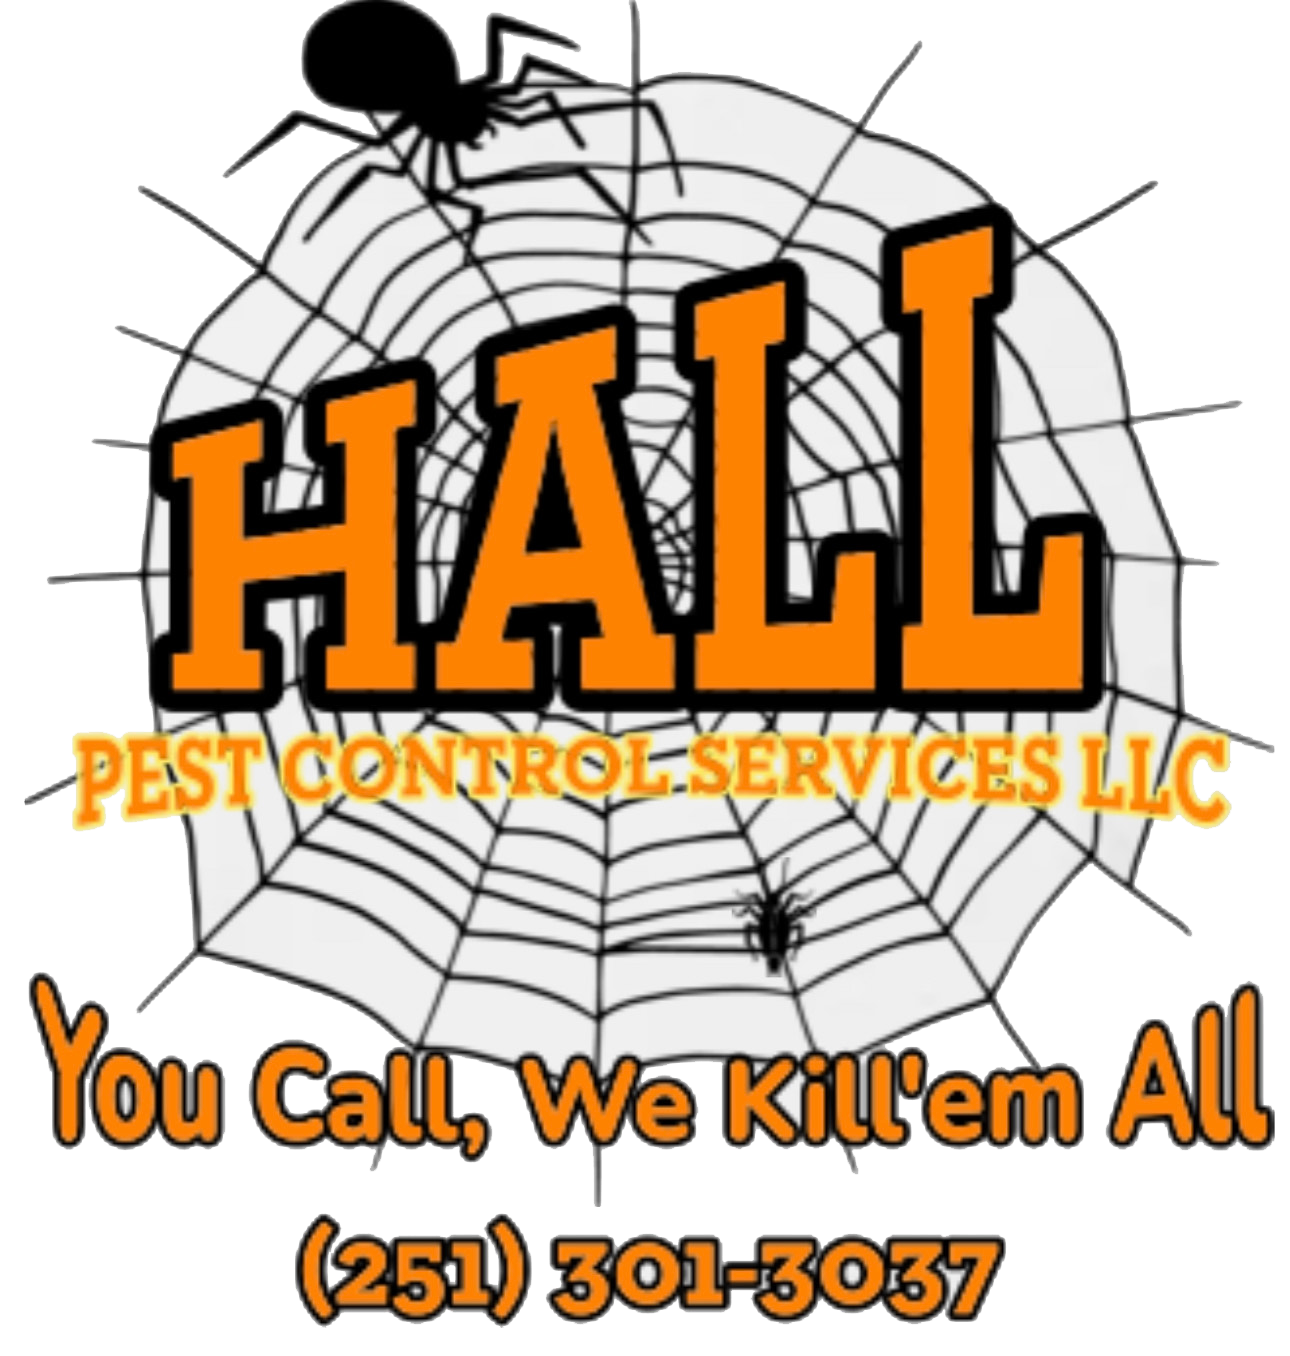 Hall Pest Control Services